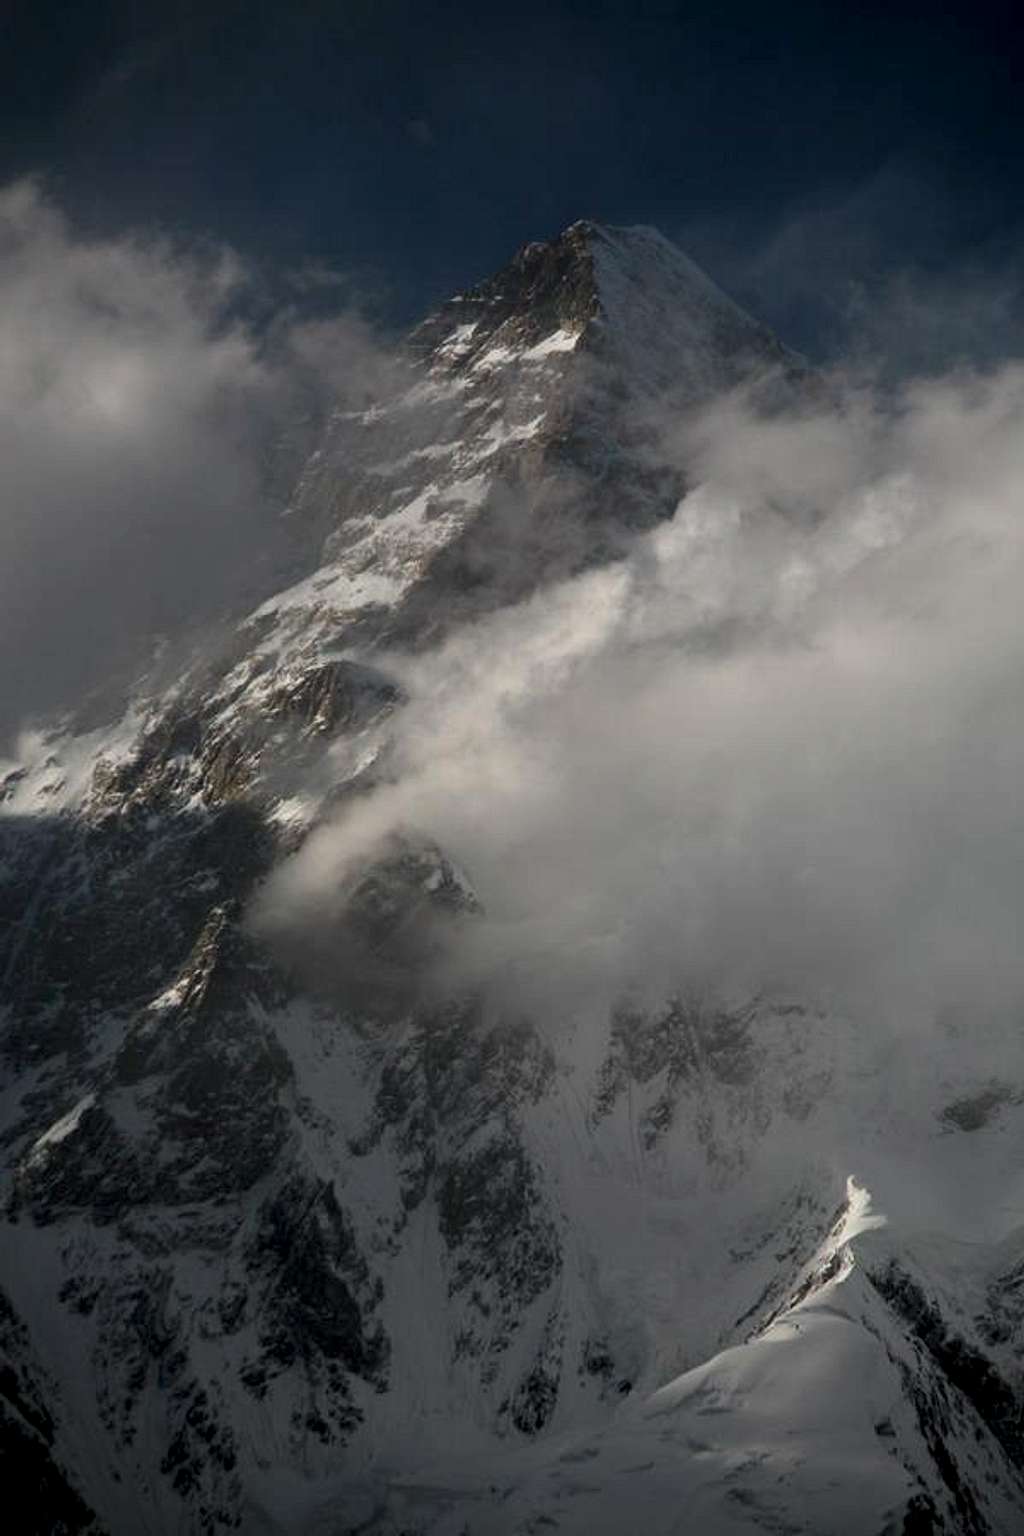 K2 (8611 m), Karakoram, Pakistan